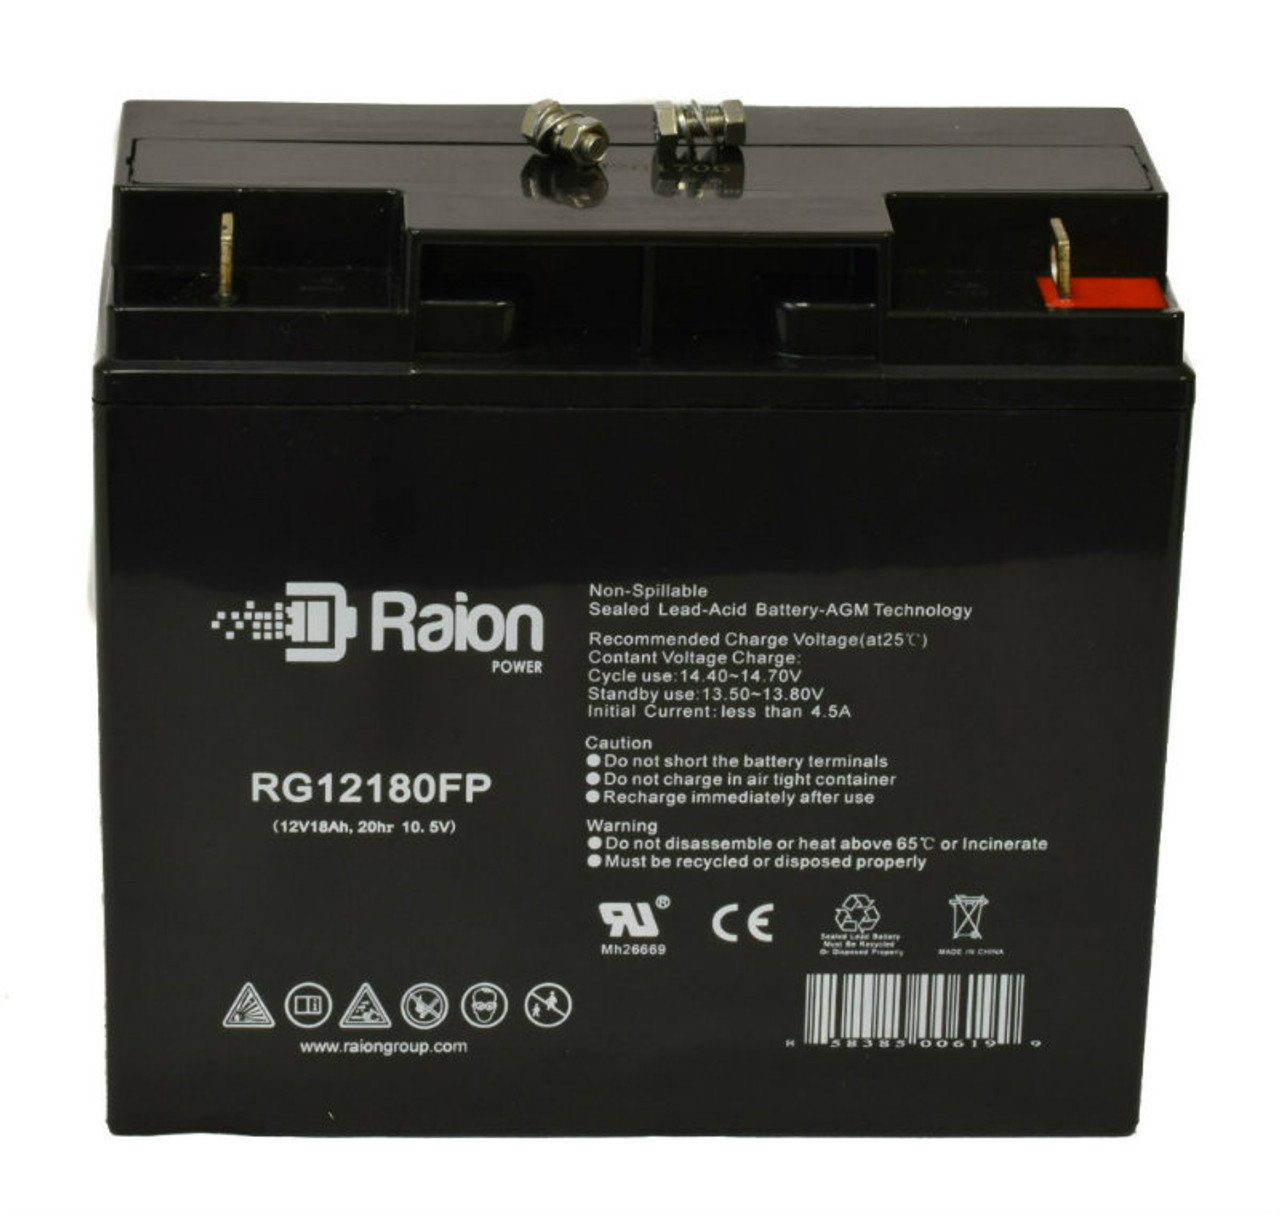 Raion Power RG12180FP 12V 18Ah Lead Acid Battery for Power Patrol SLA1116